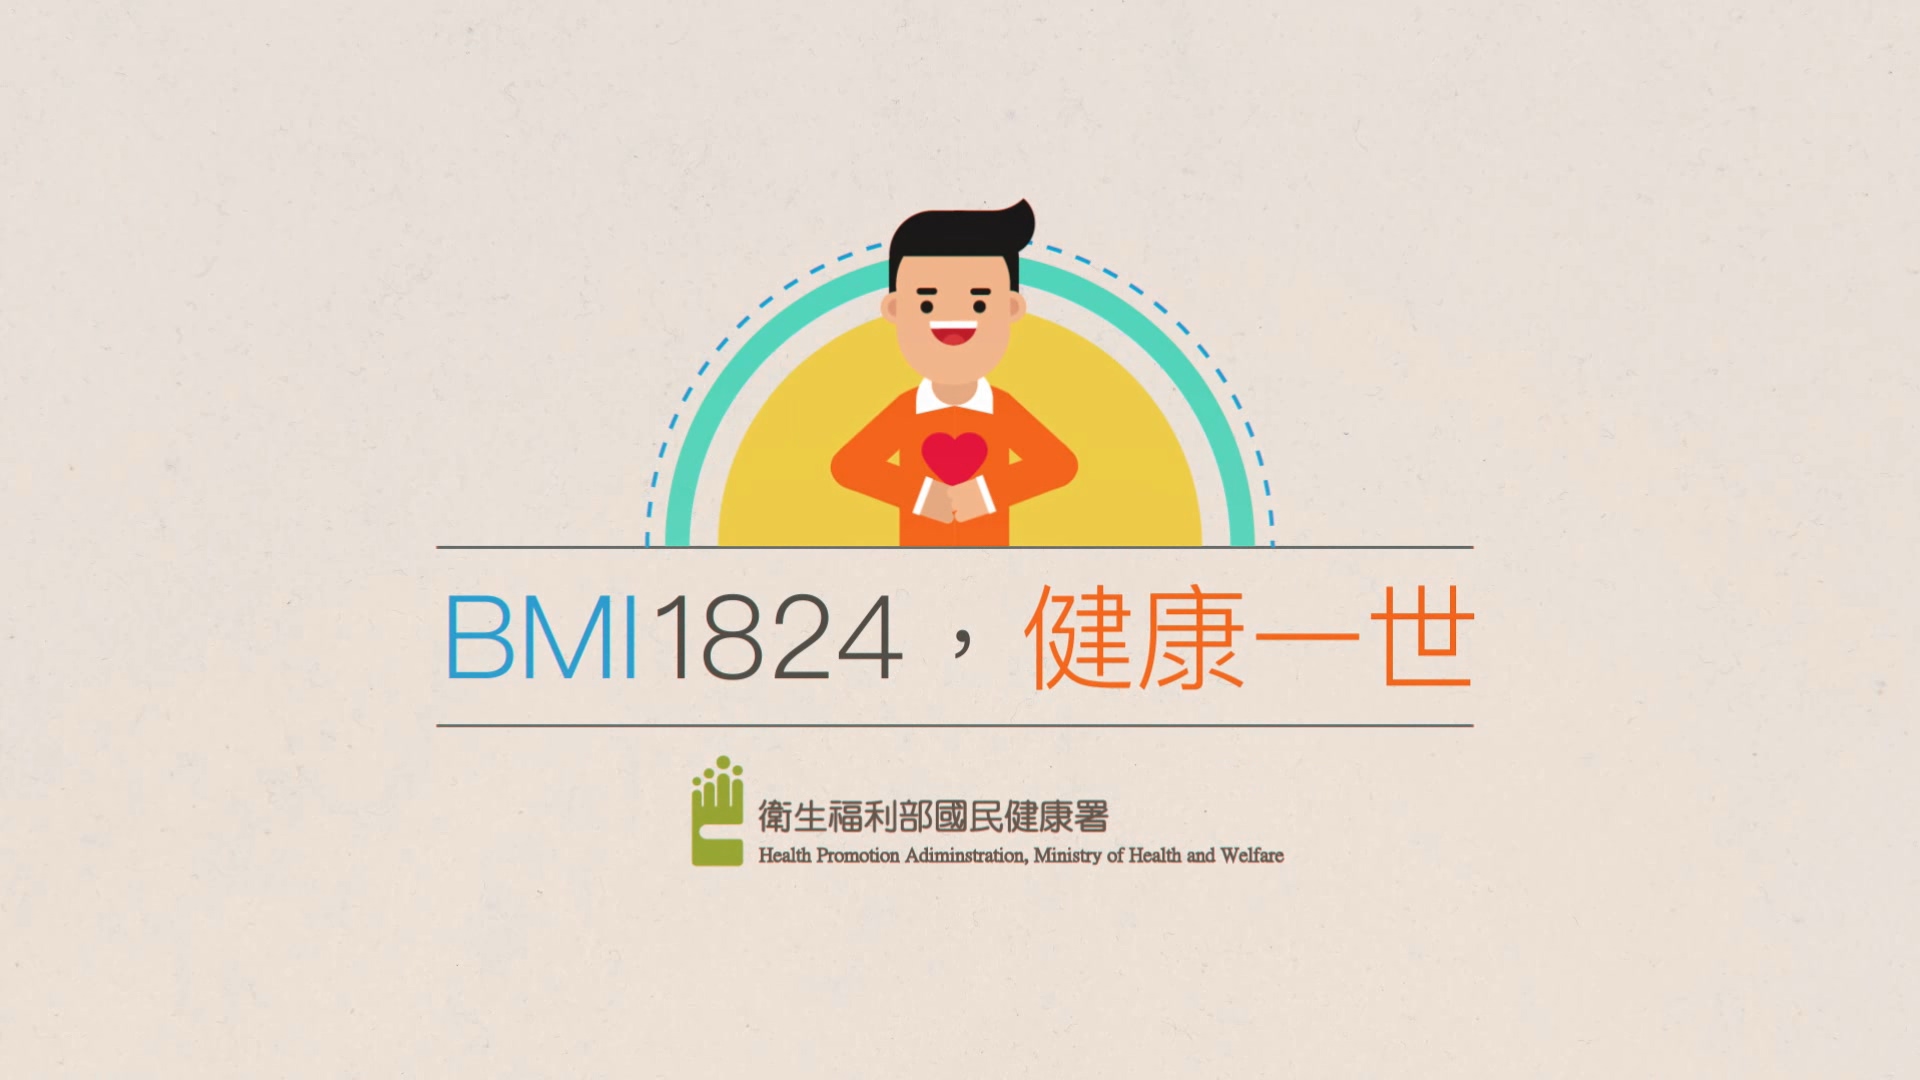 BMI 1824，健康一世